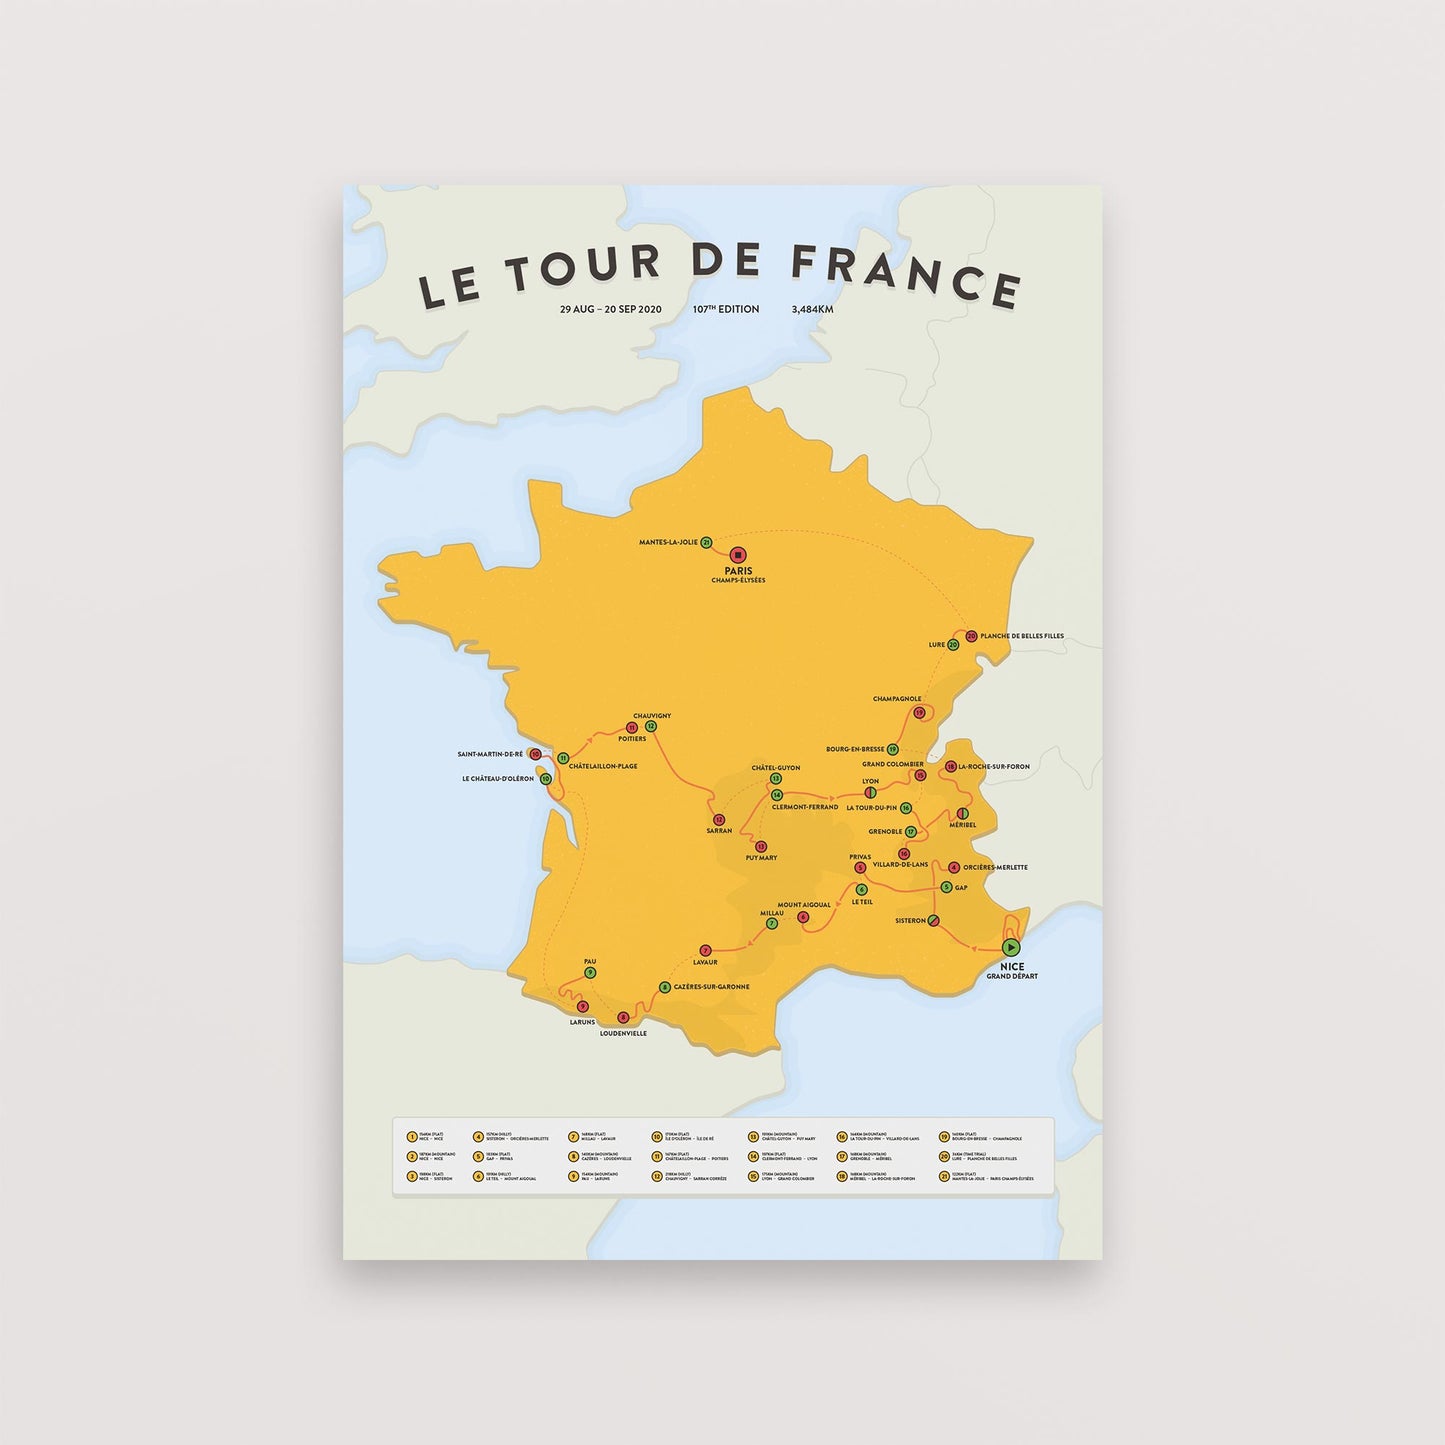 Tour de France Map – Poster – The English Cyclist